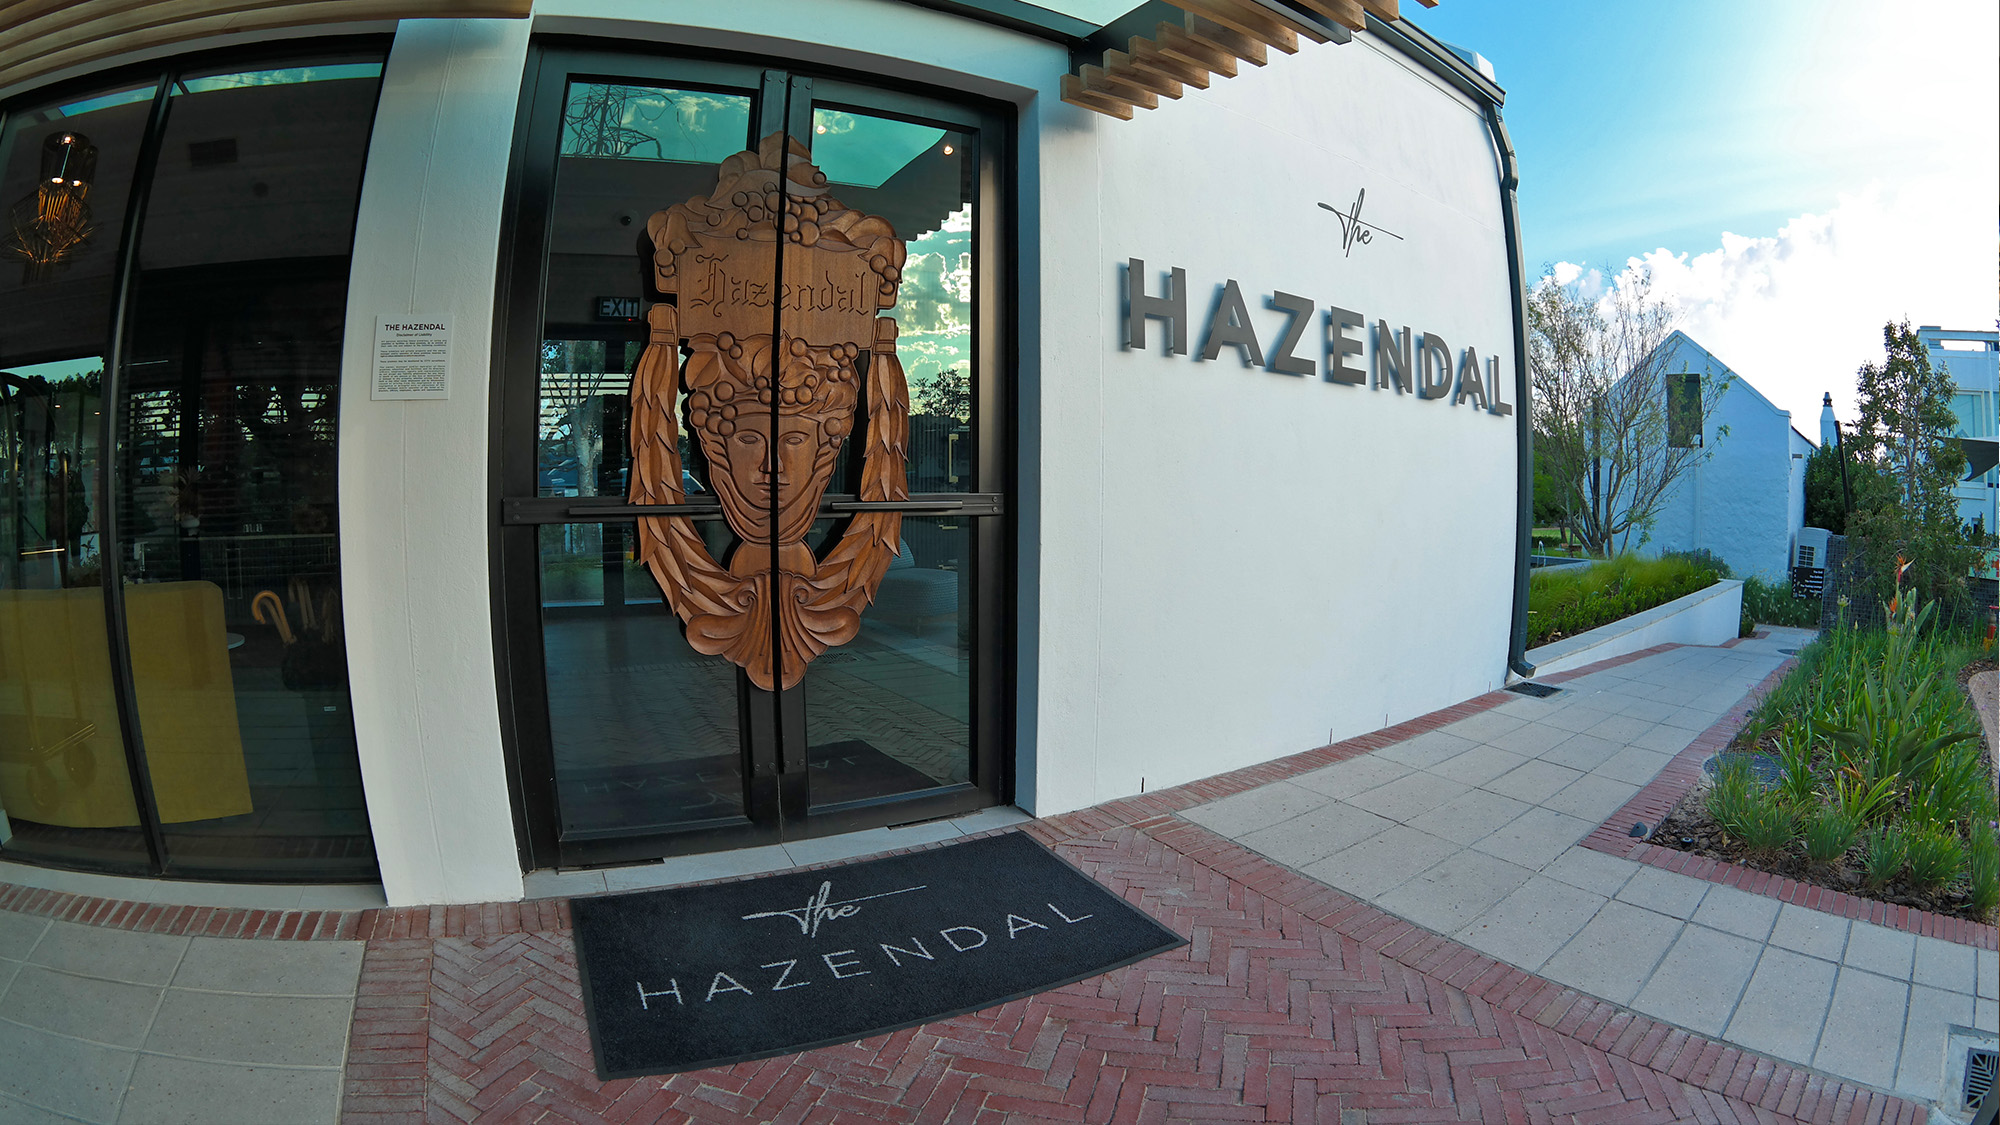 The Hazendal